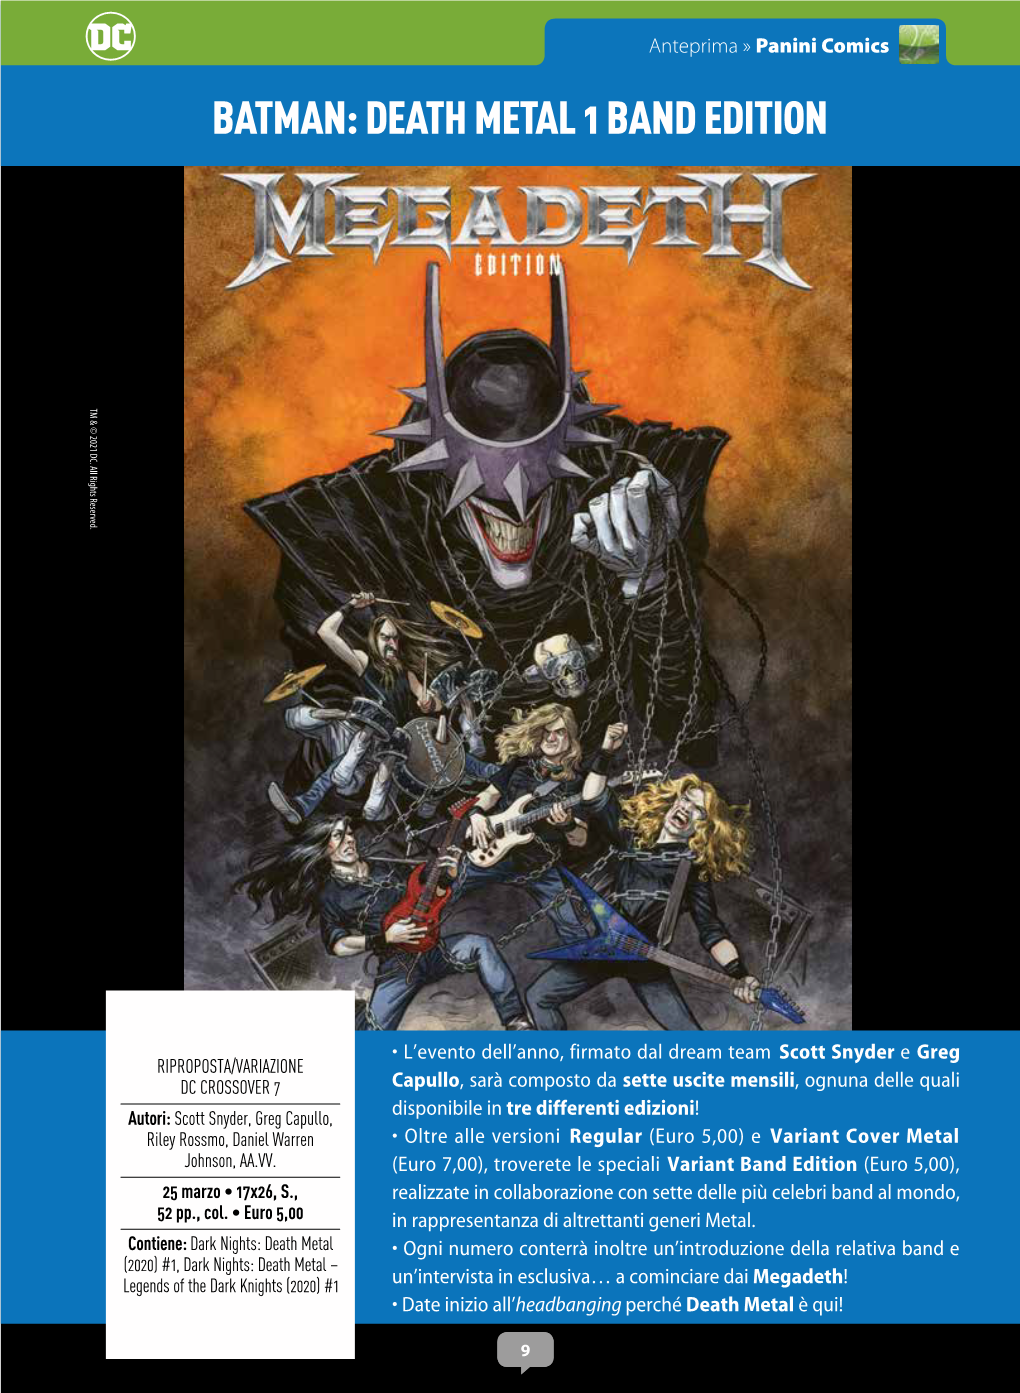 Batman: Death Metal 1 Band Edition Tm & © 2021 Dc